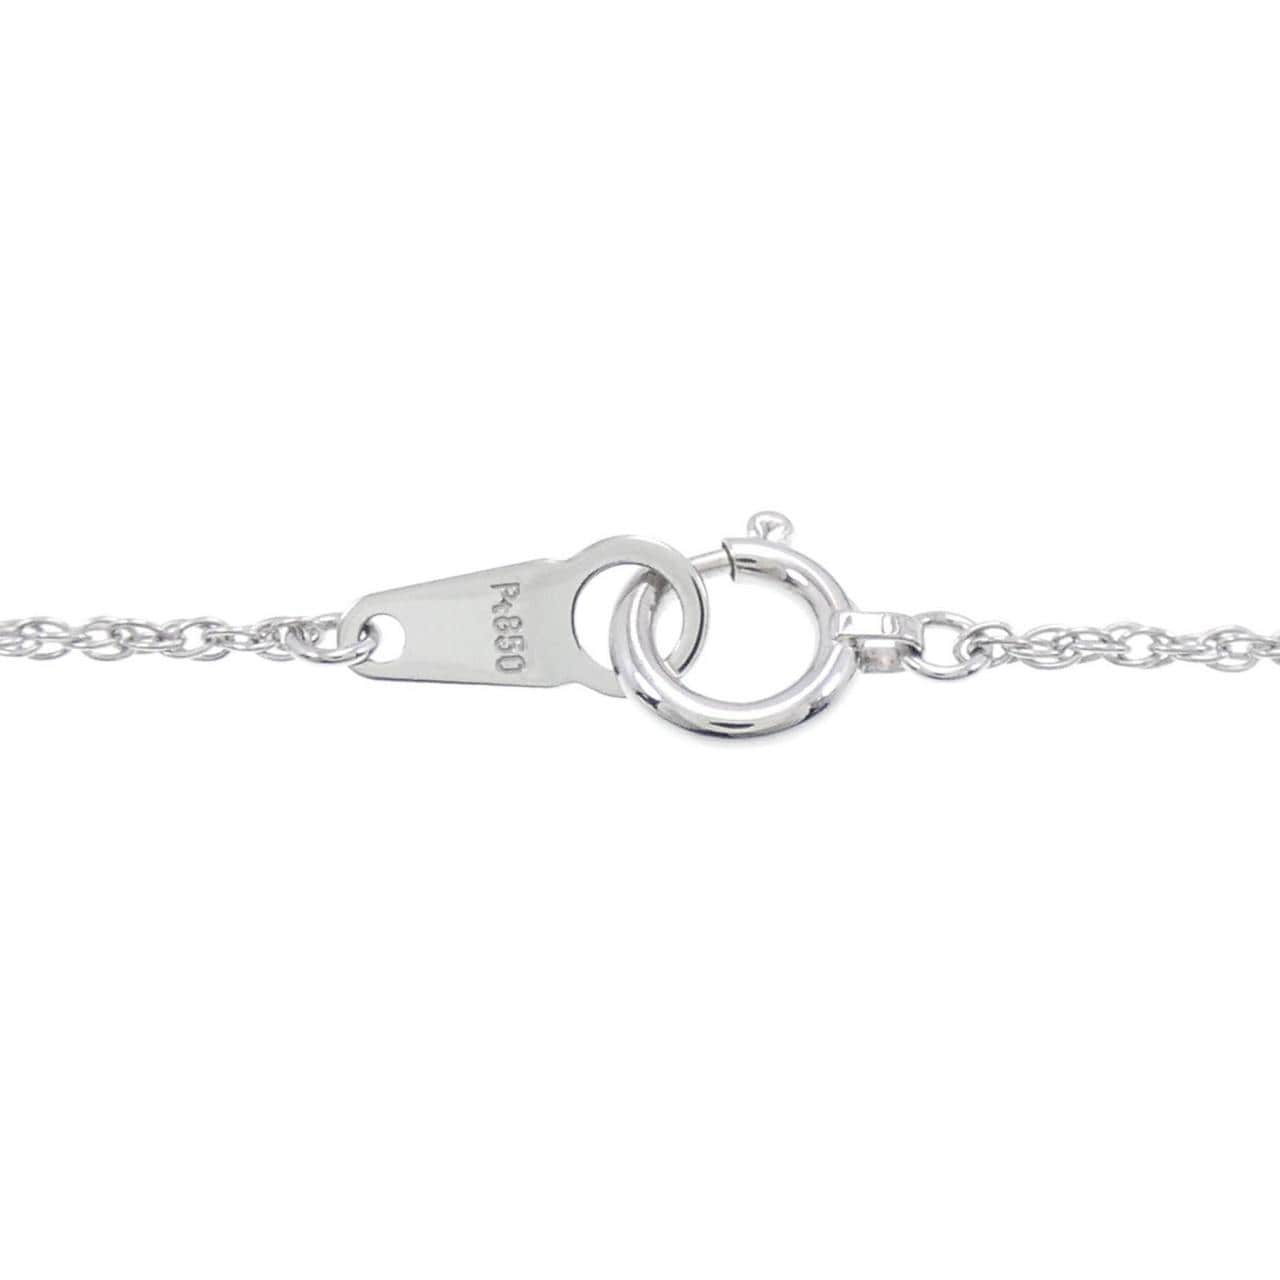 PT Flower Diamond Necklace 0.35CT